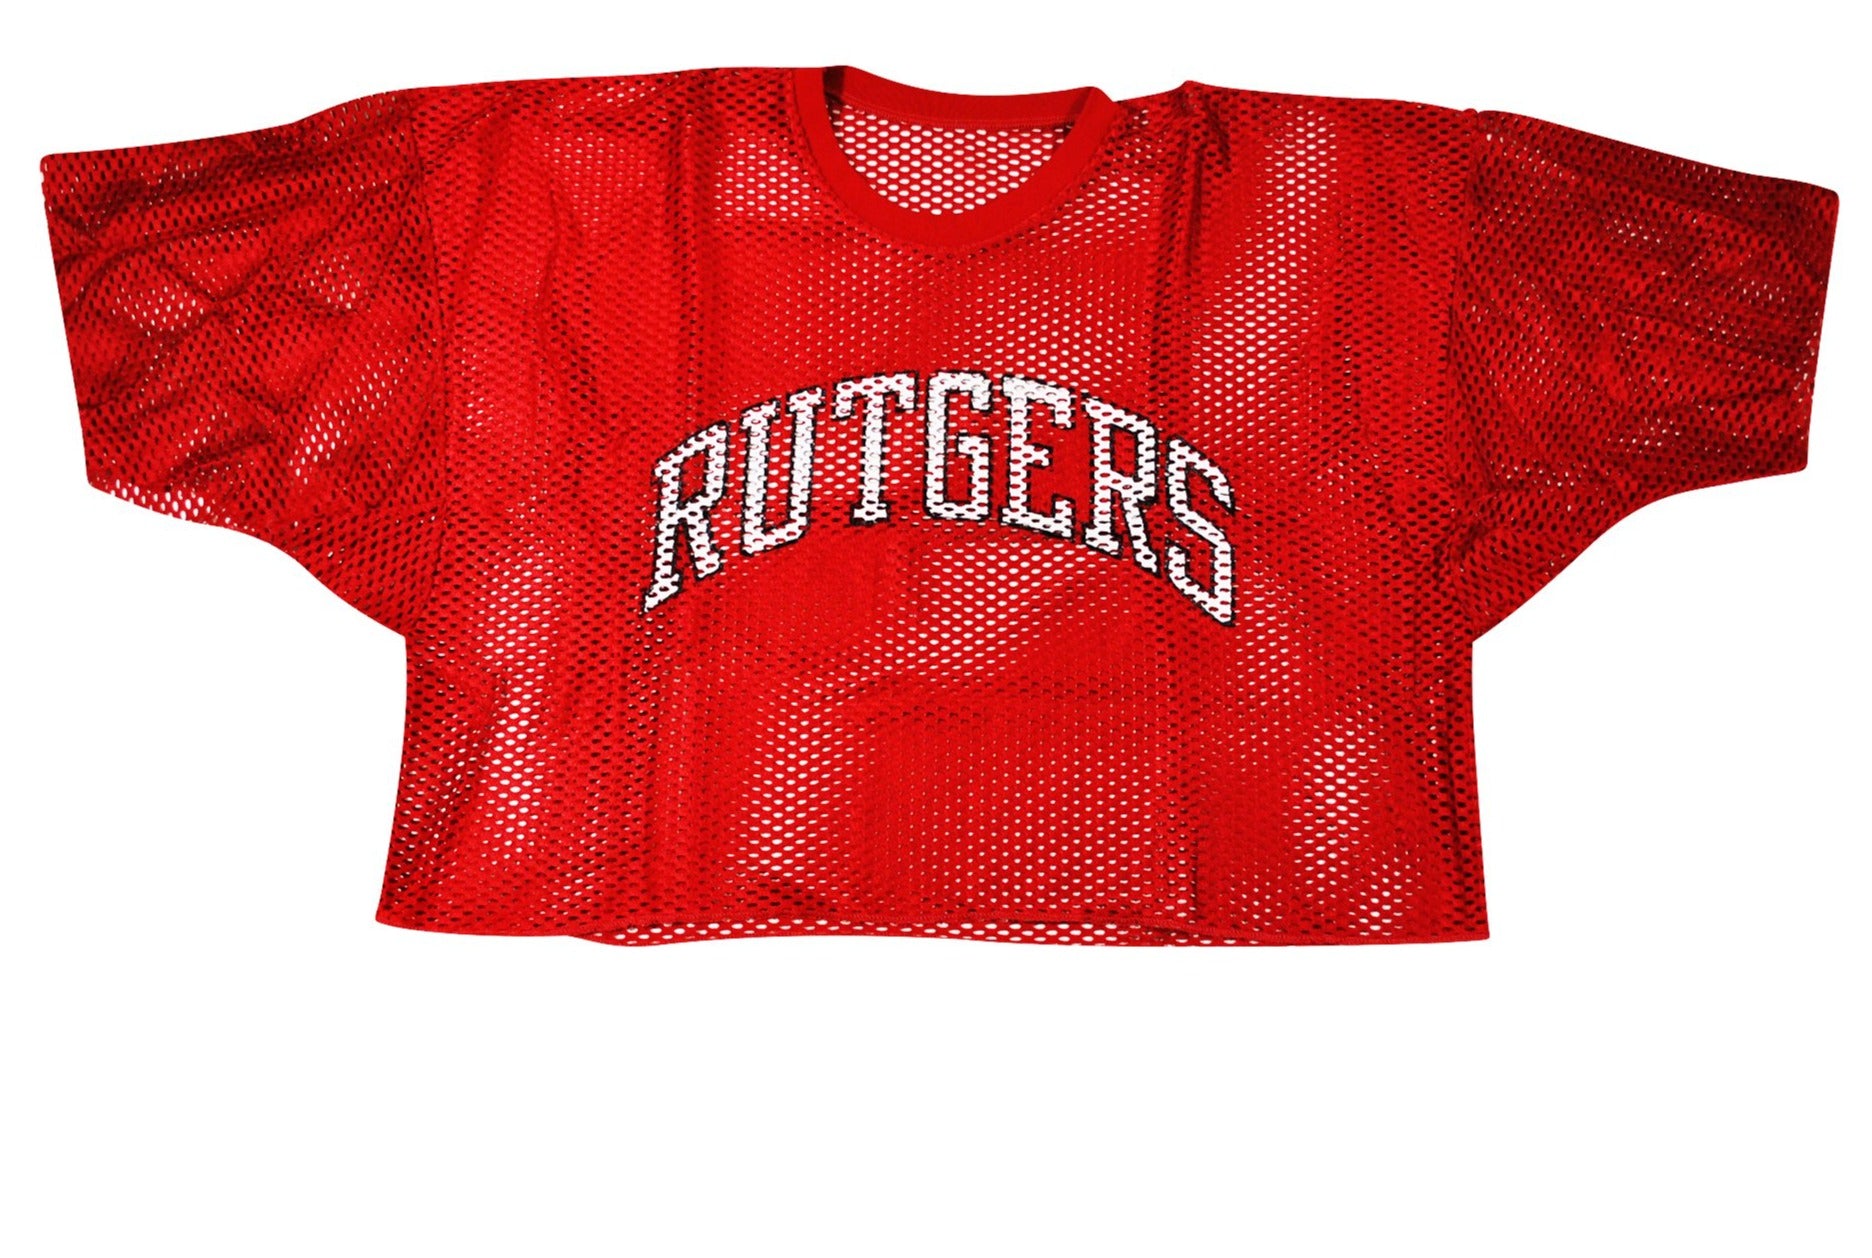 Rutgers Scarlet Knights golf jersey